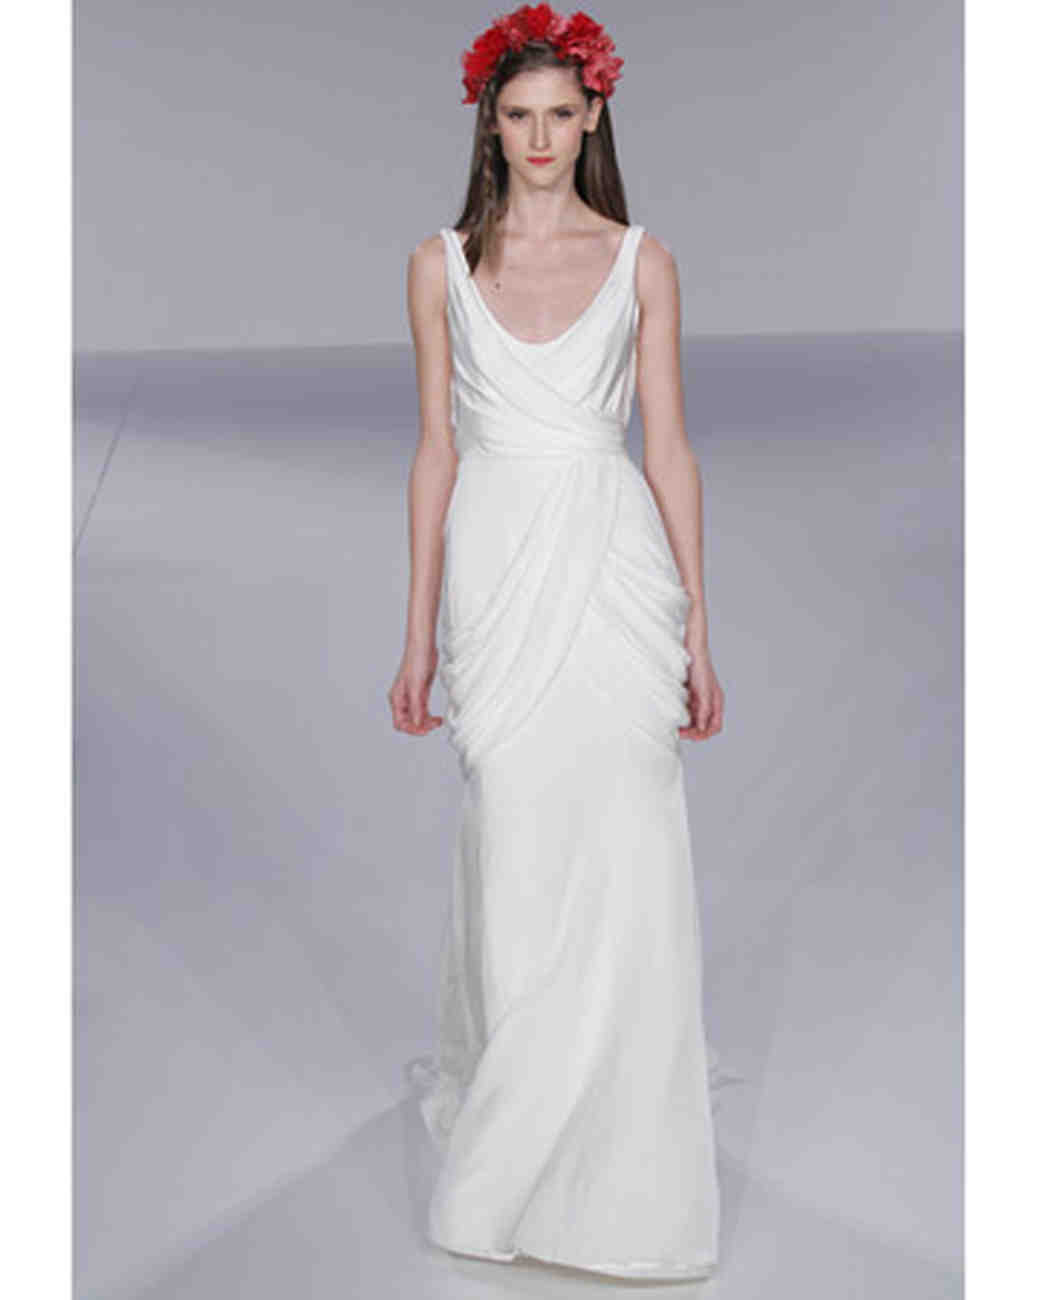 Priscilla of Boston 'Sheath' size 6 used wedding dress front view on model